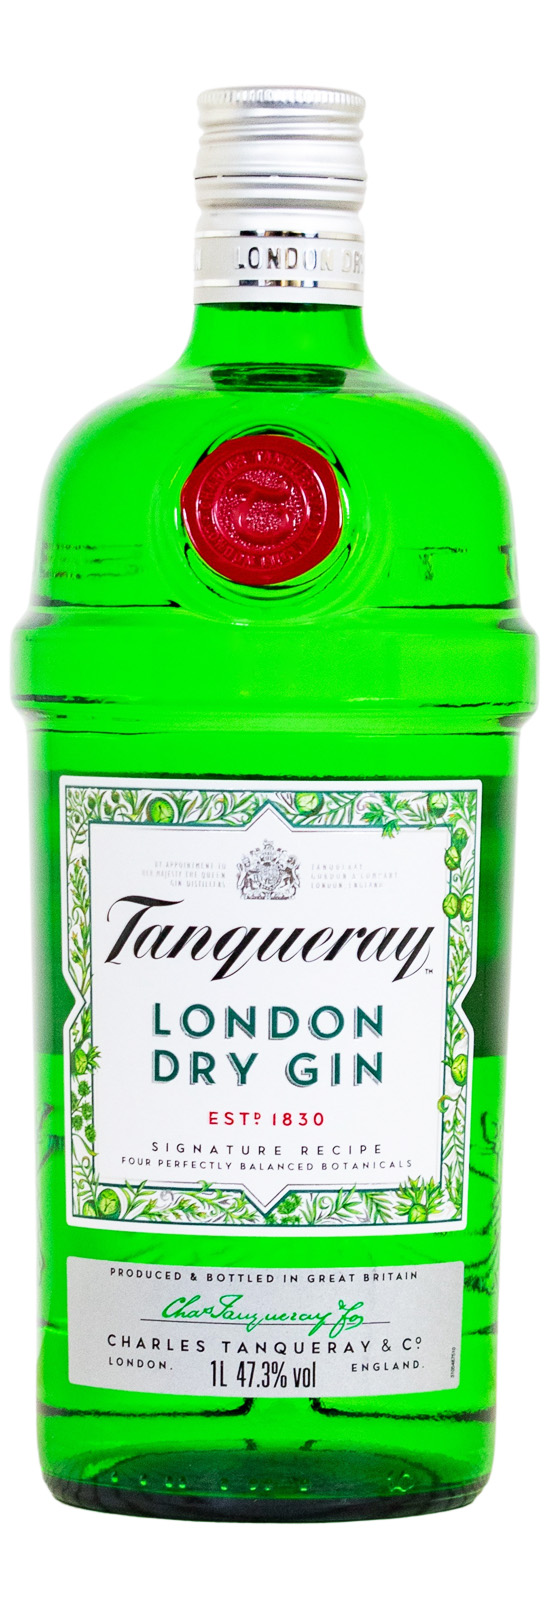 Tanqueray London Dry Gin - 1 Liter 47,3% vol